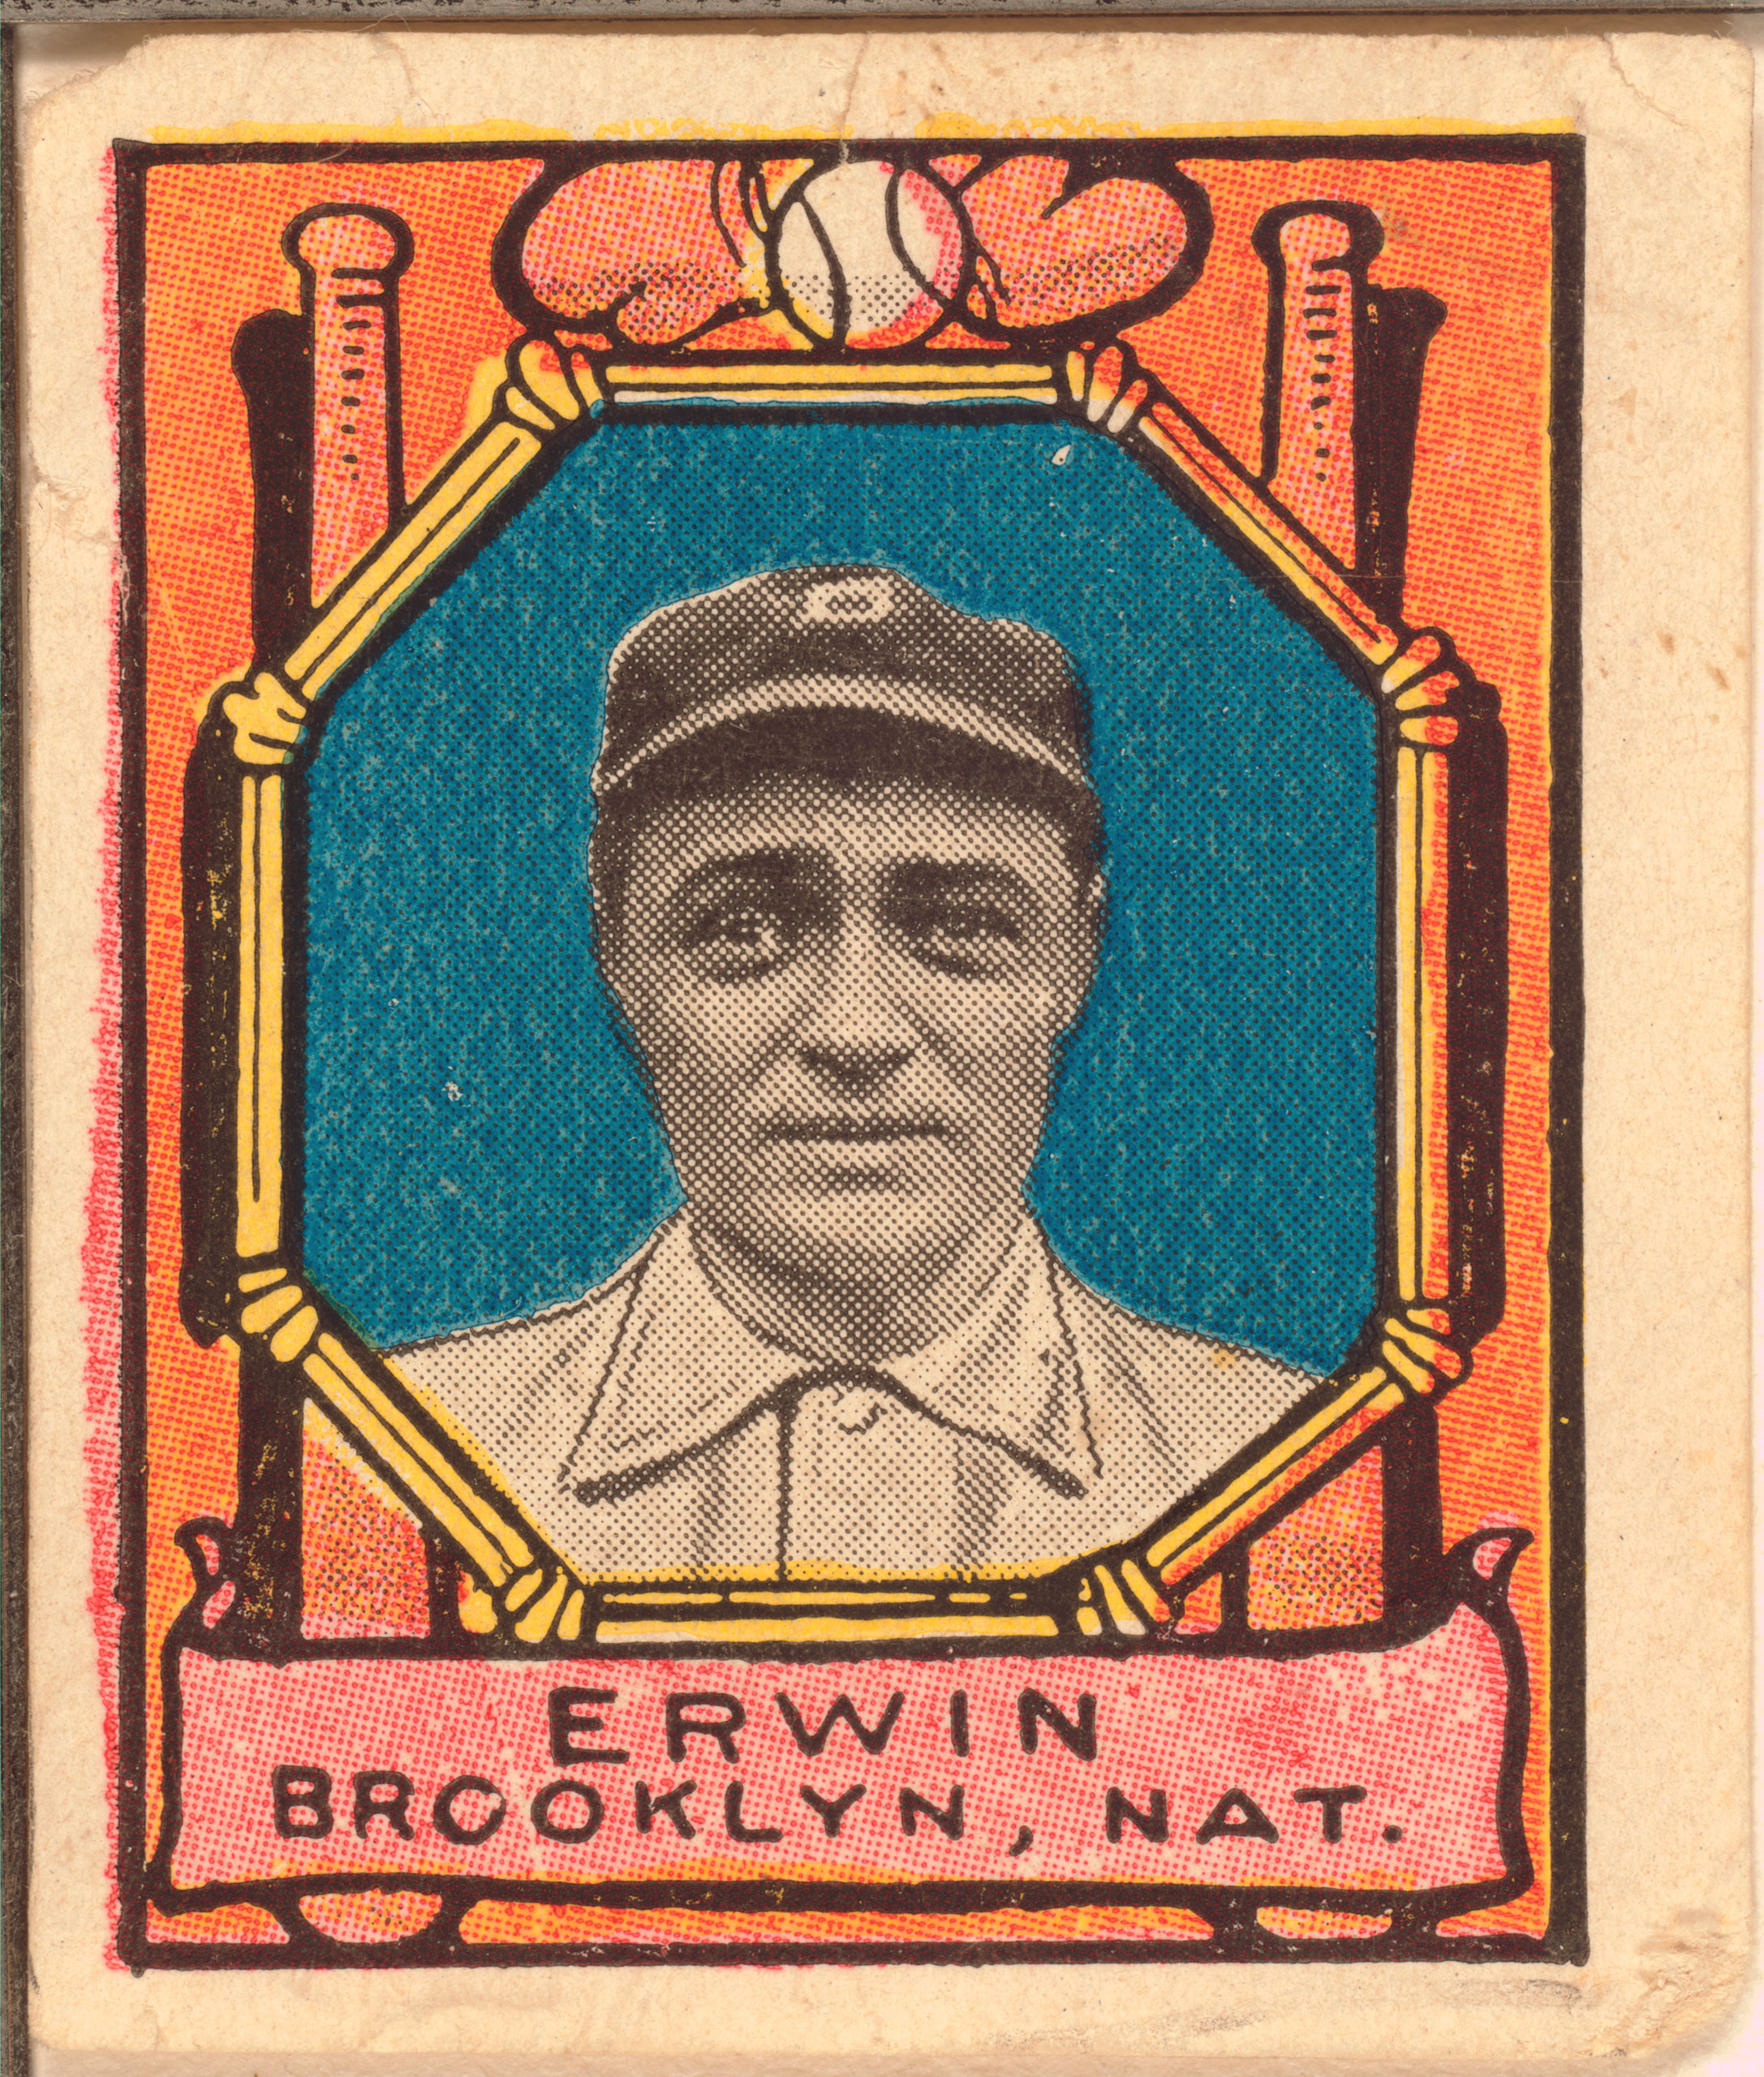 Tex Erwin, Brooklyn Dodgers, baseball card, 1911.